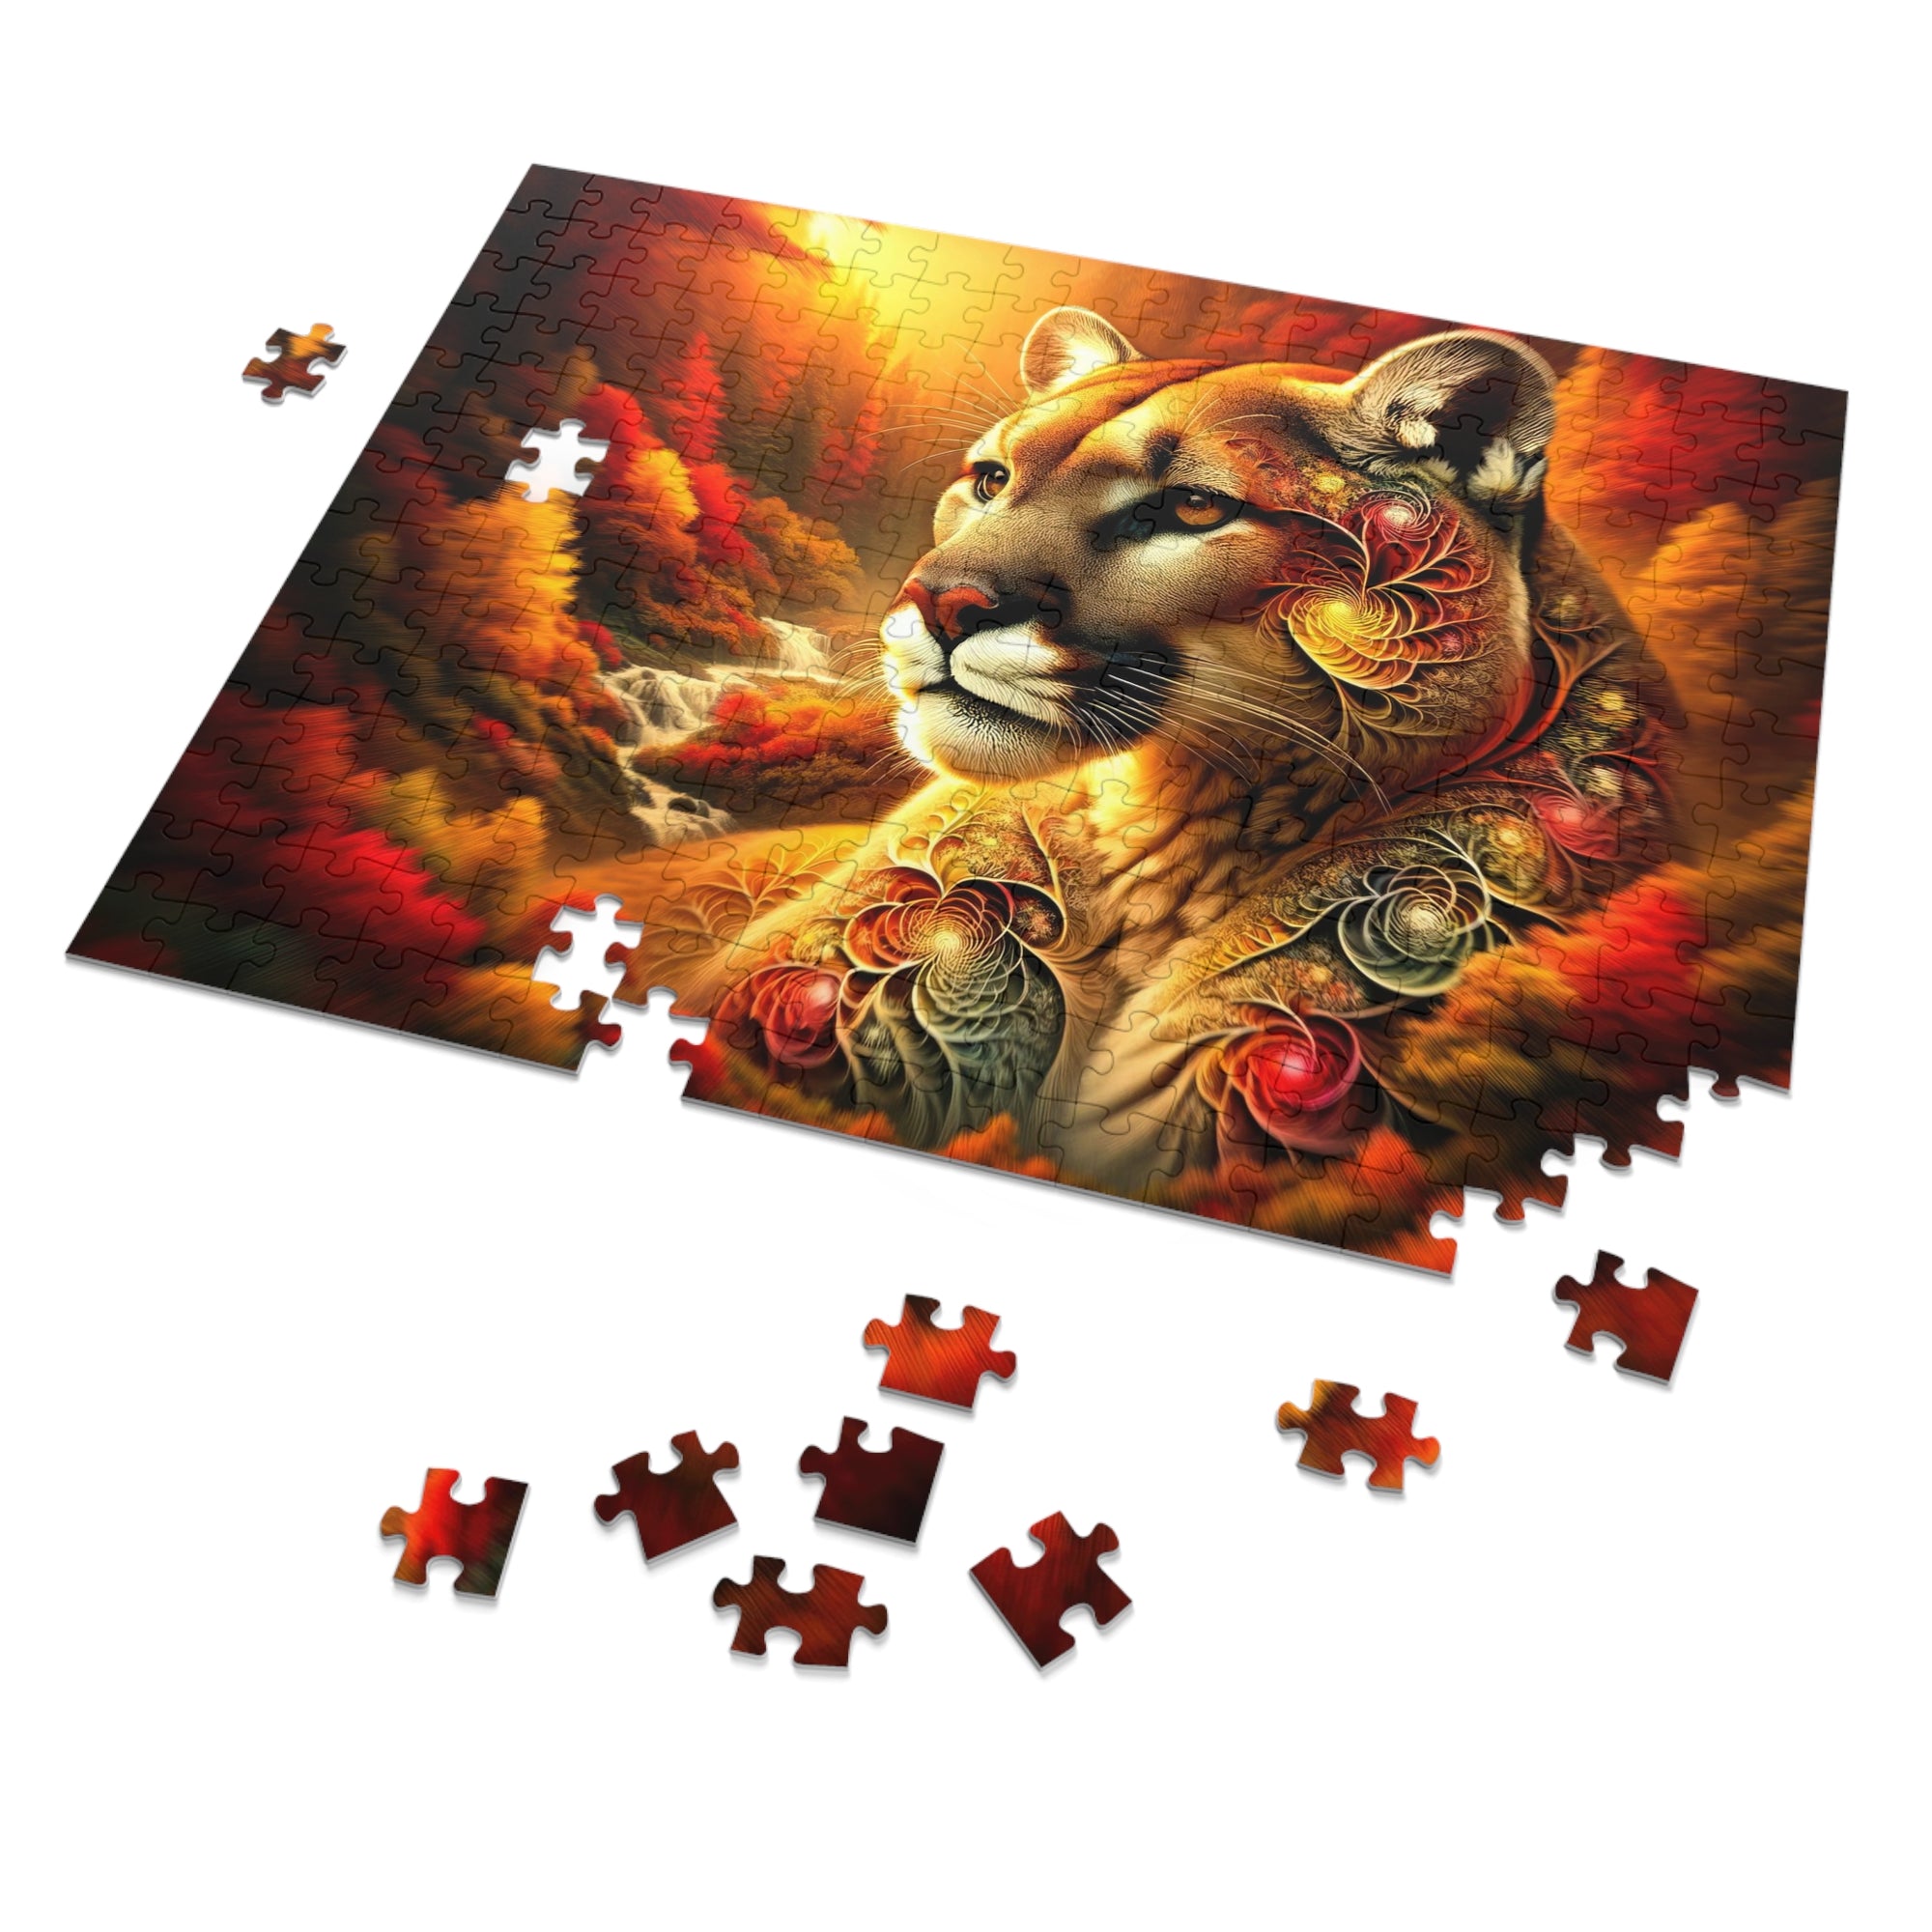 The Cougar's Mosaic Soul Puzzle